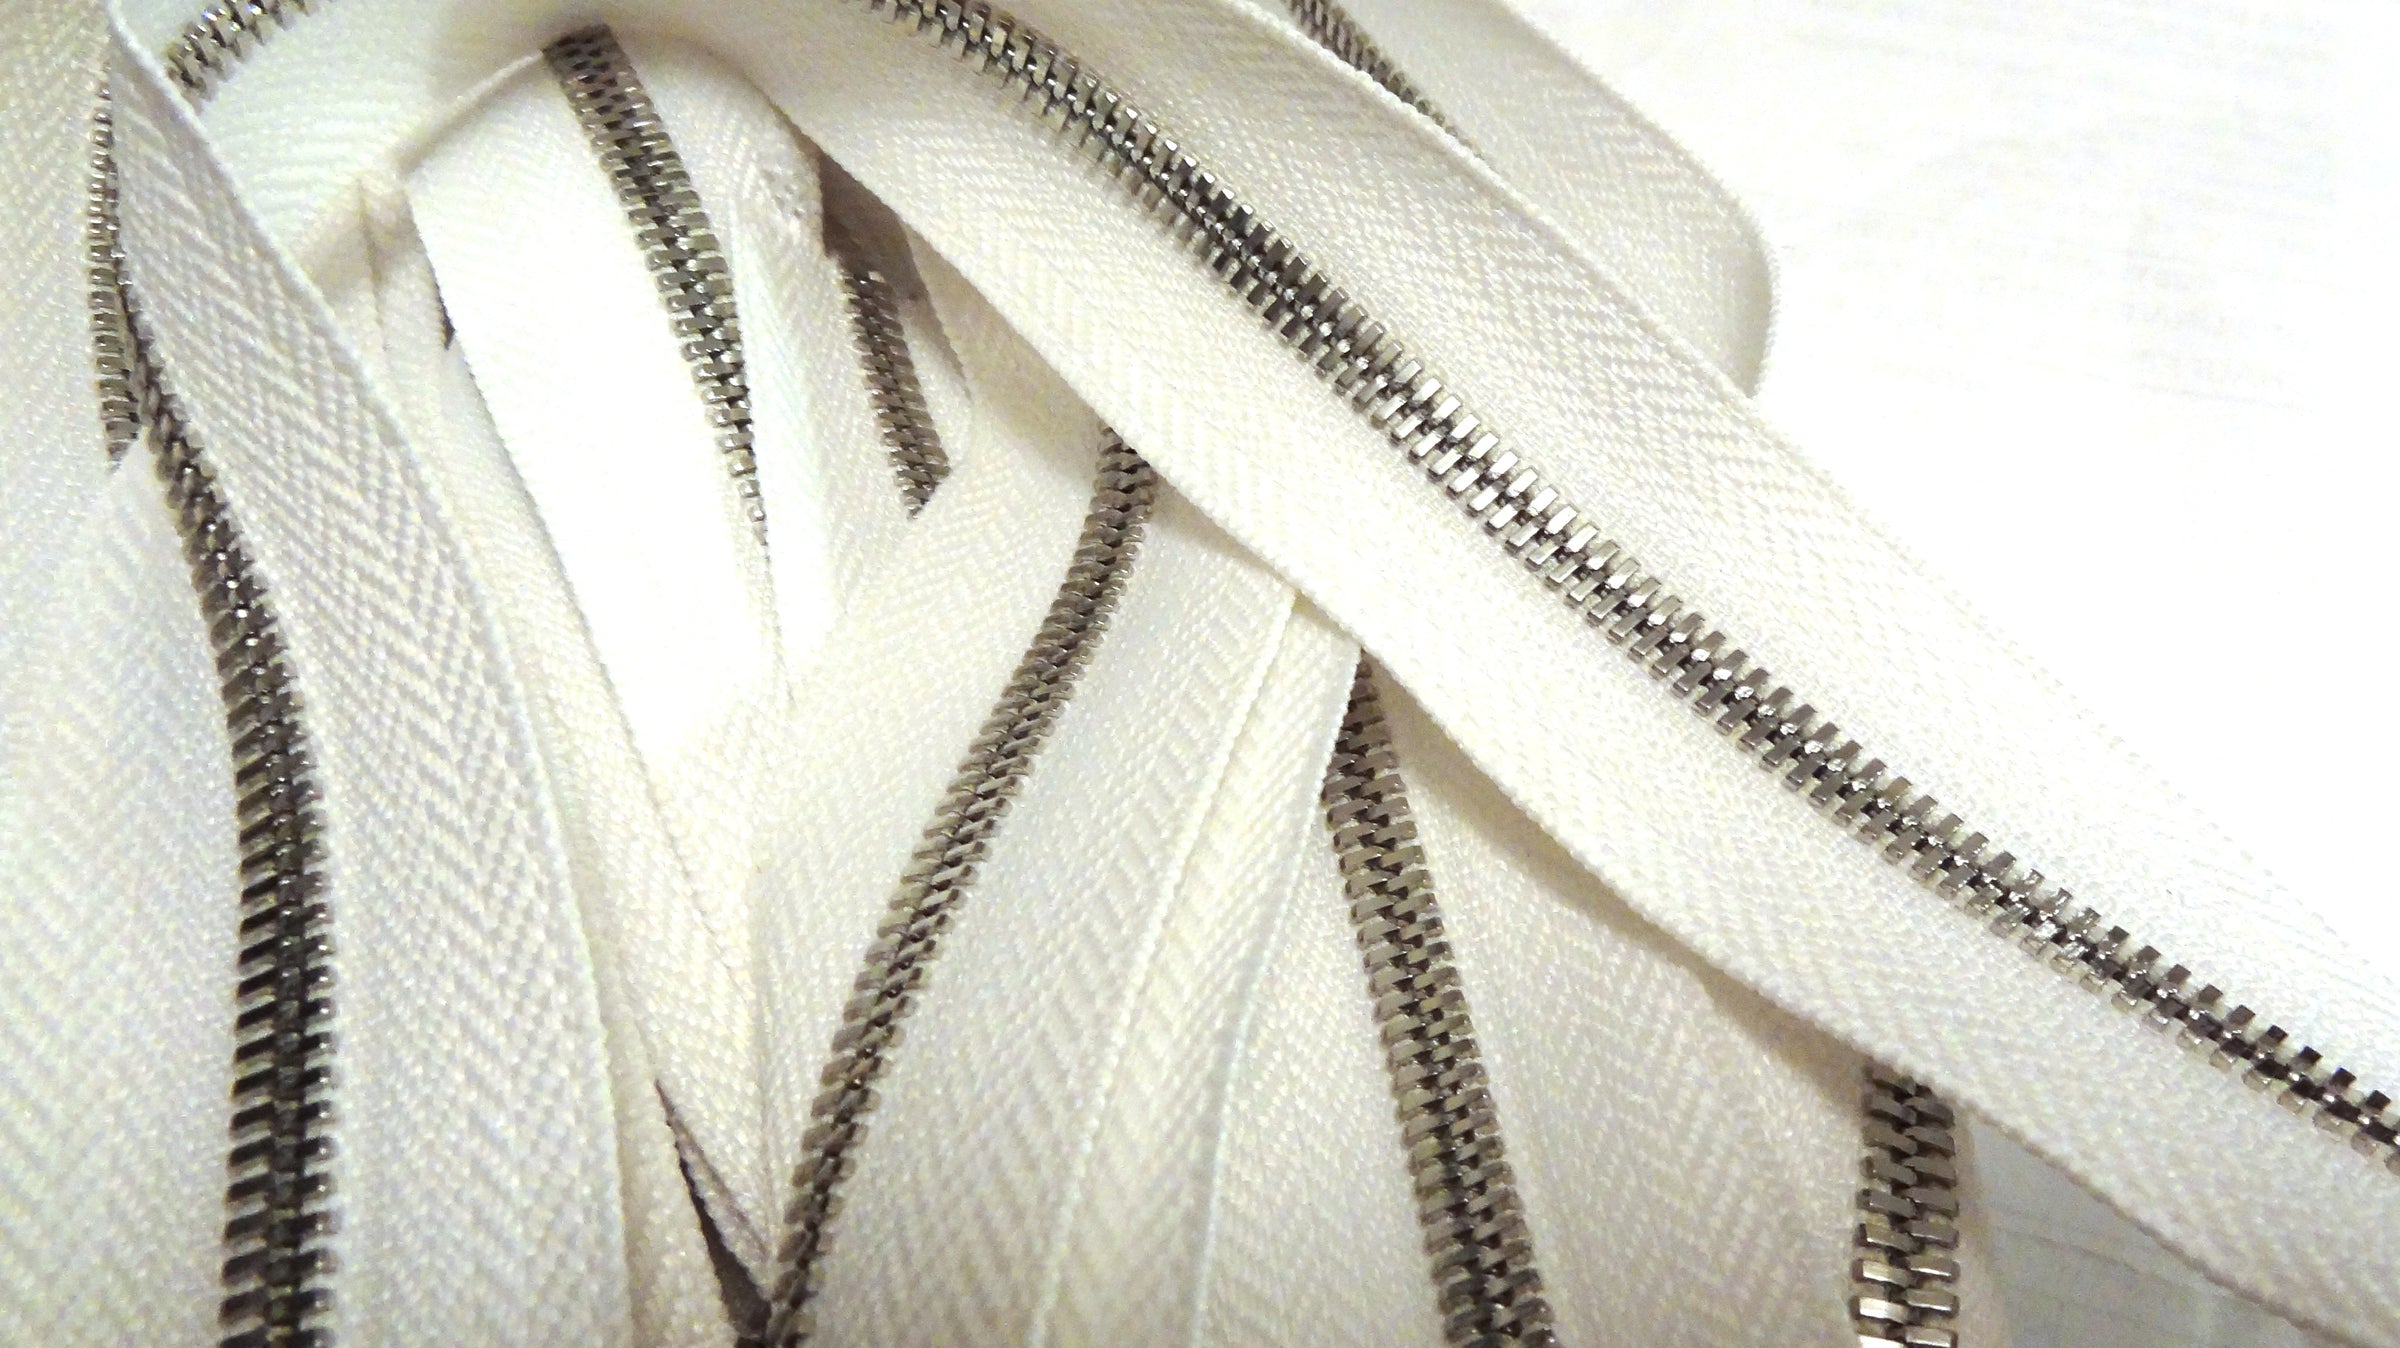 Premium Photo  Zipped and unzipped metallic zipper lock on white